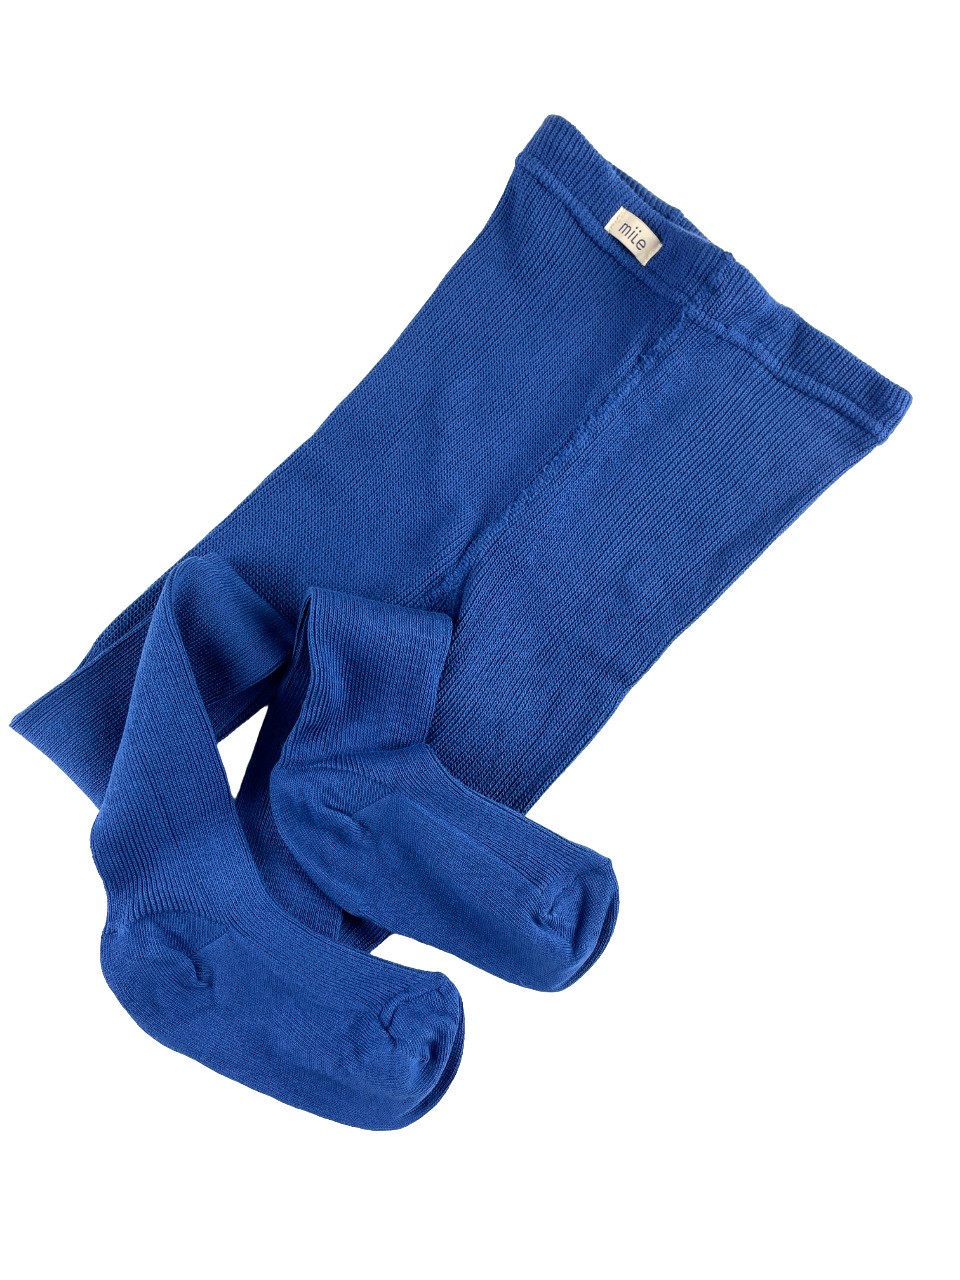 Stockings, cobalt